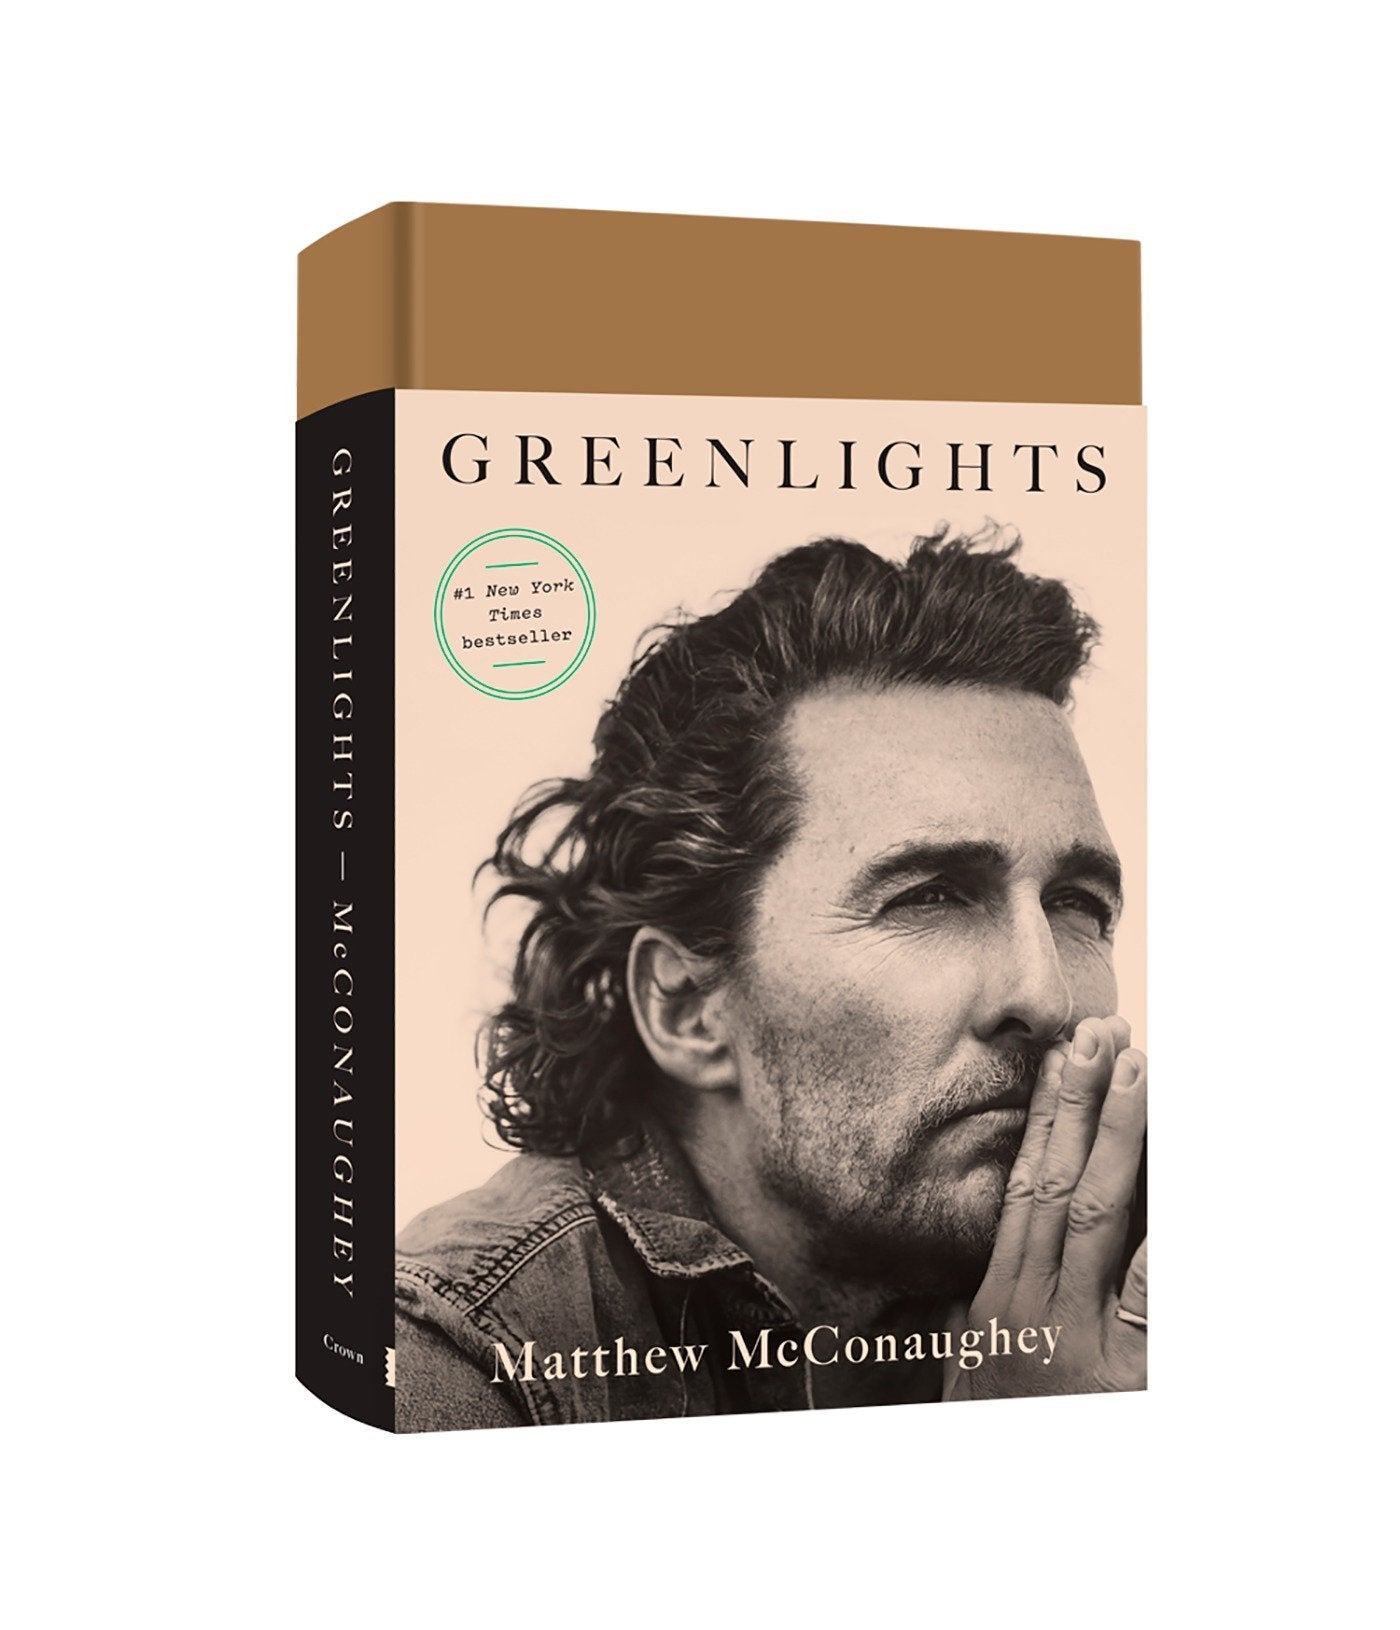 Greenlights by Matthew McConaughey [Hardcover] - LV'S Global Media